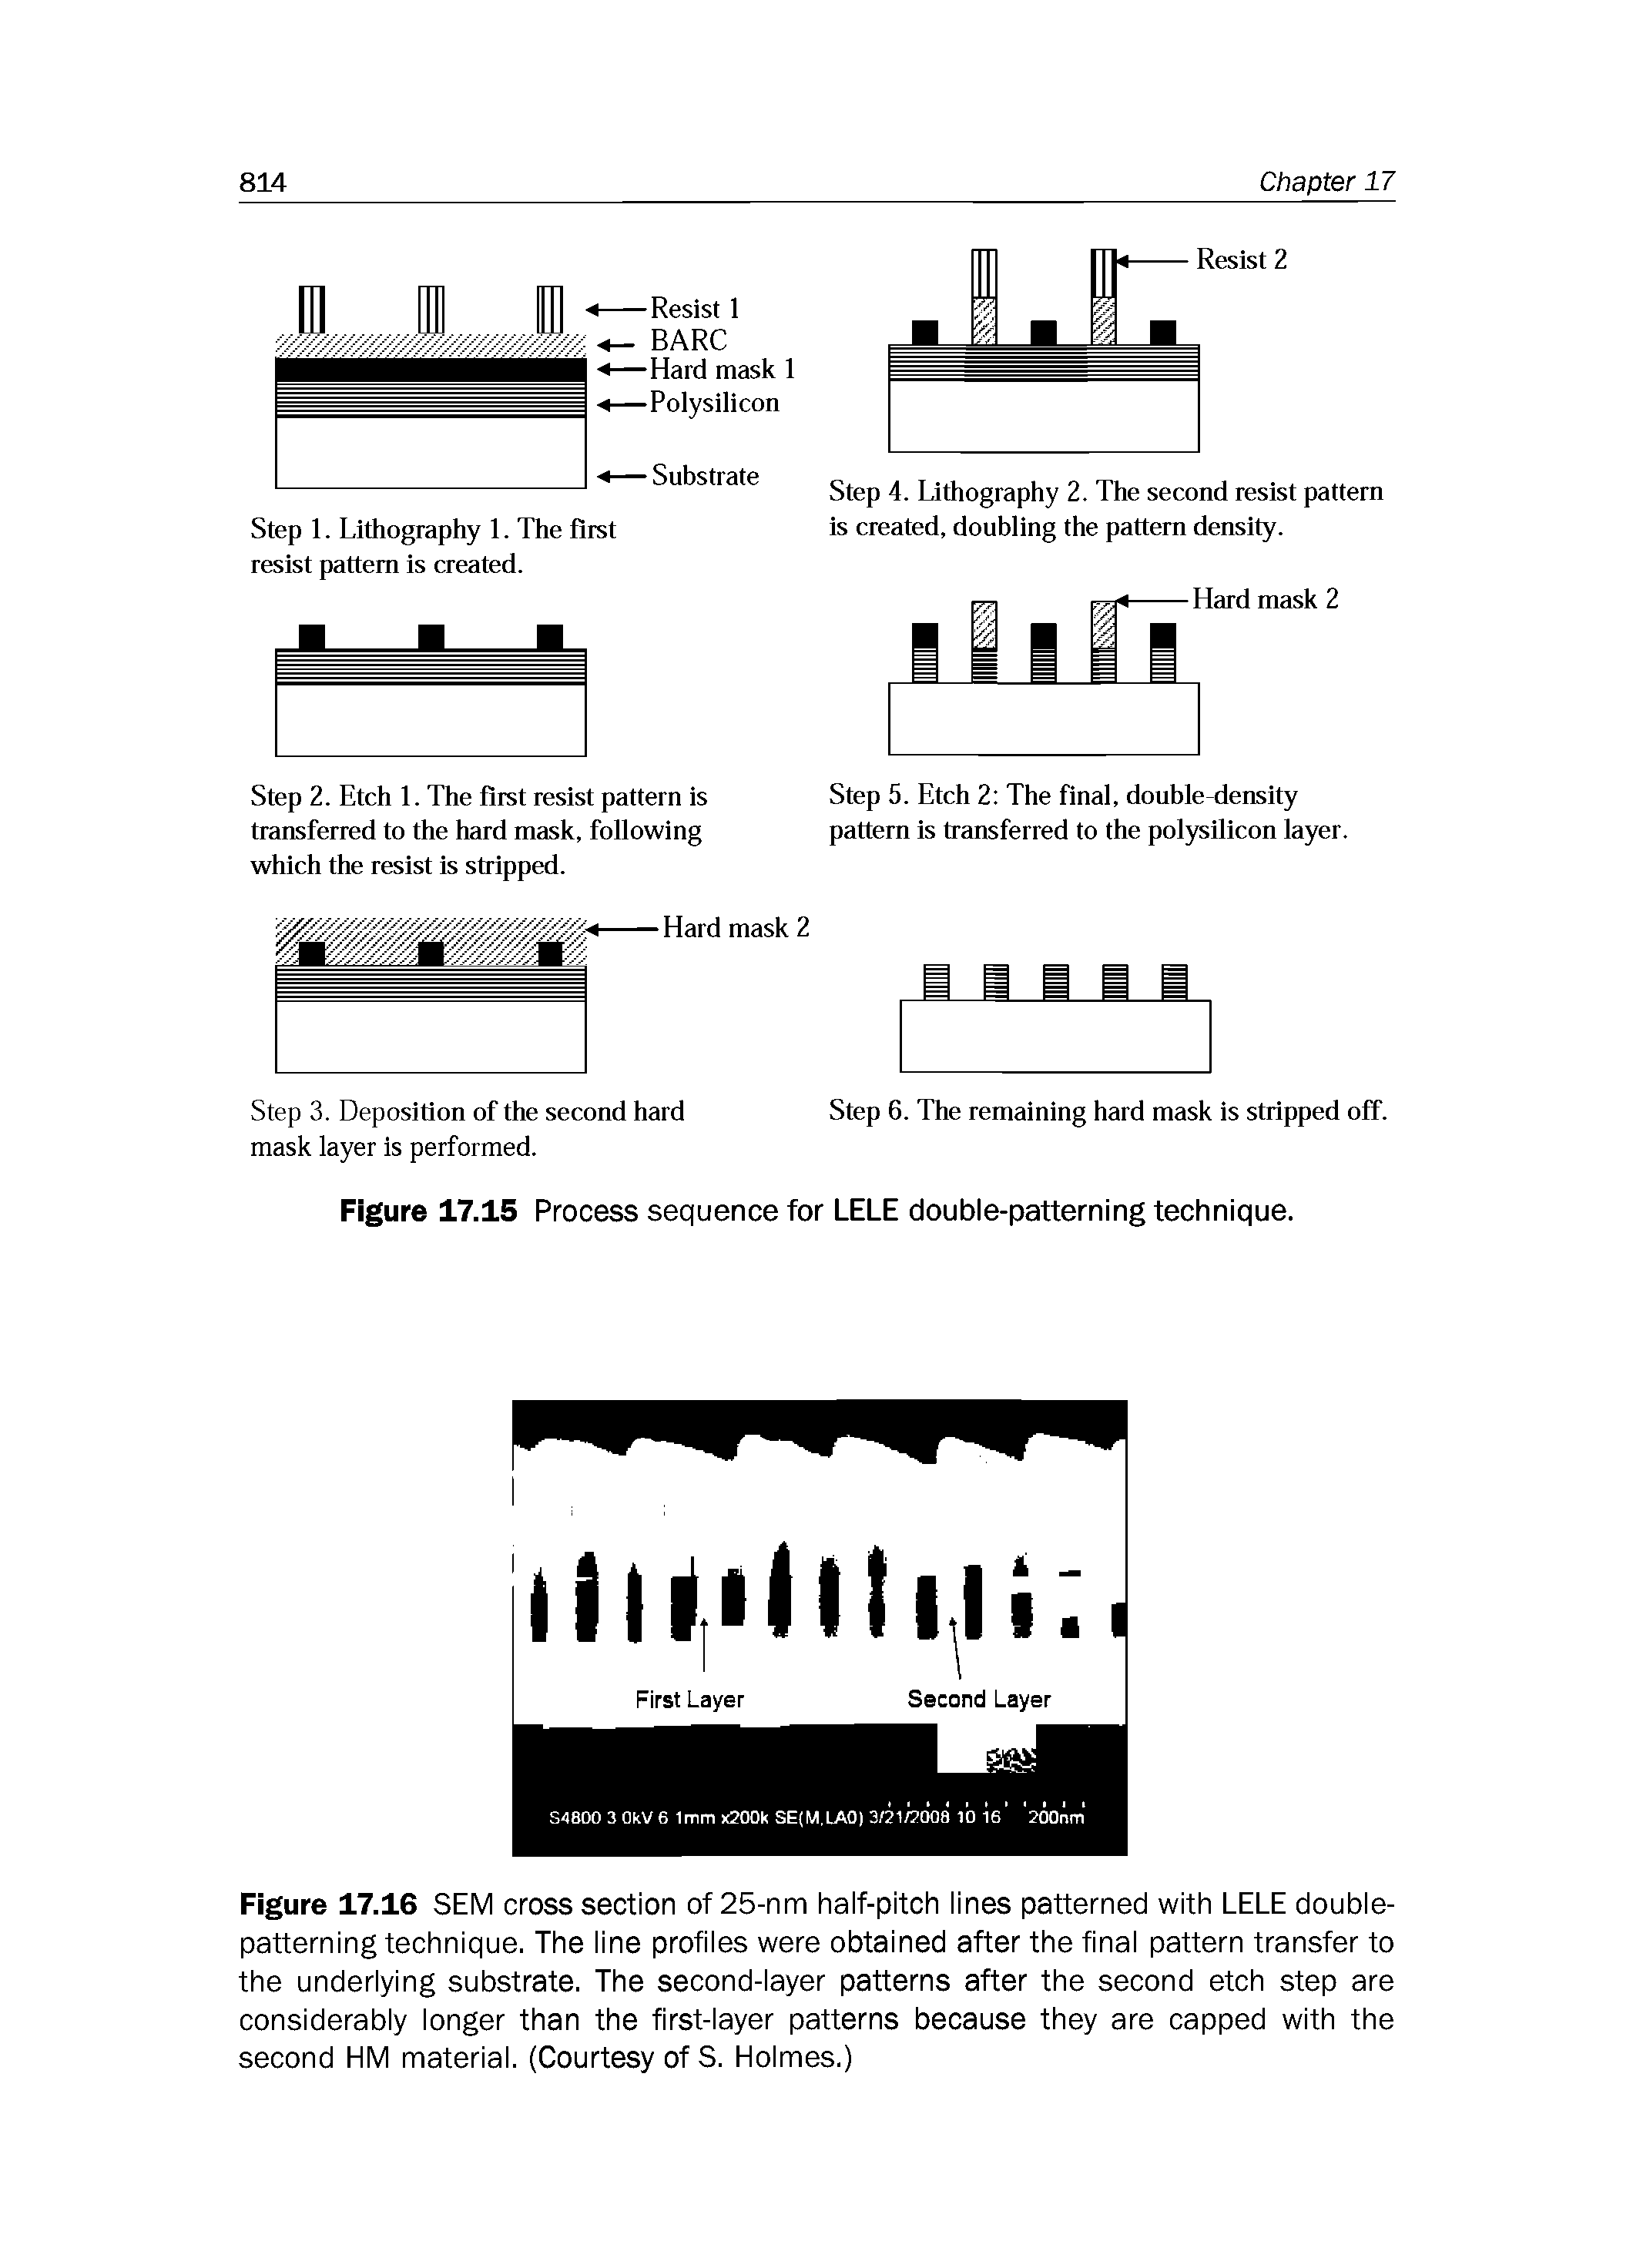 Figure 17.15 Process sequence for LELE double-patterning technique.